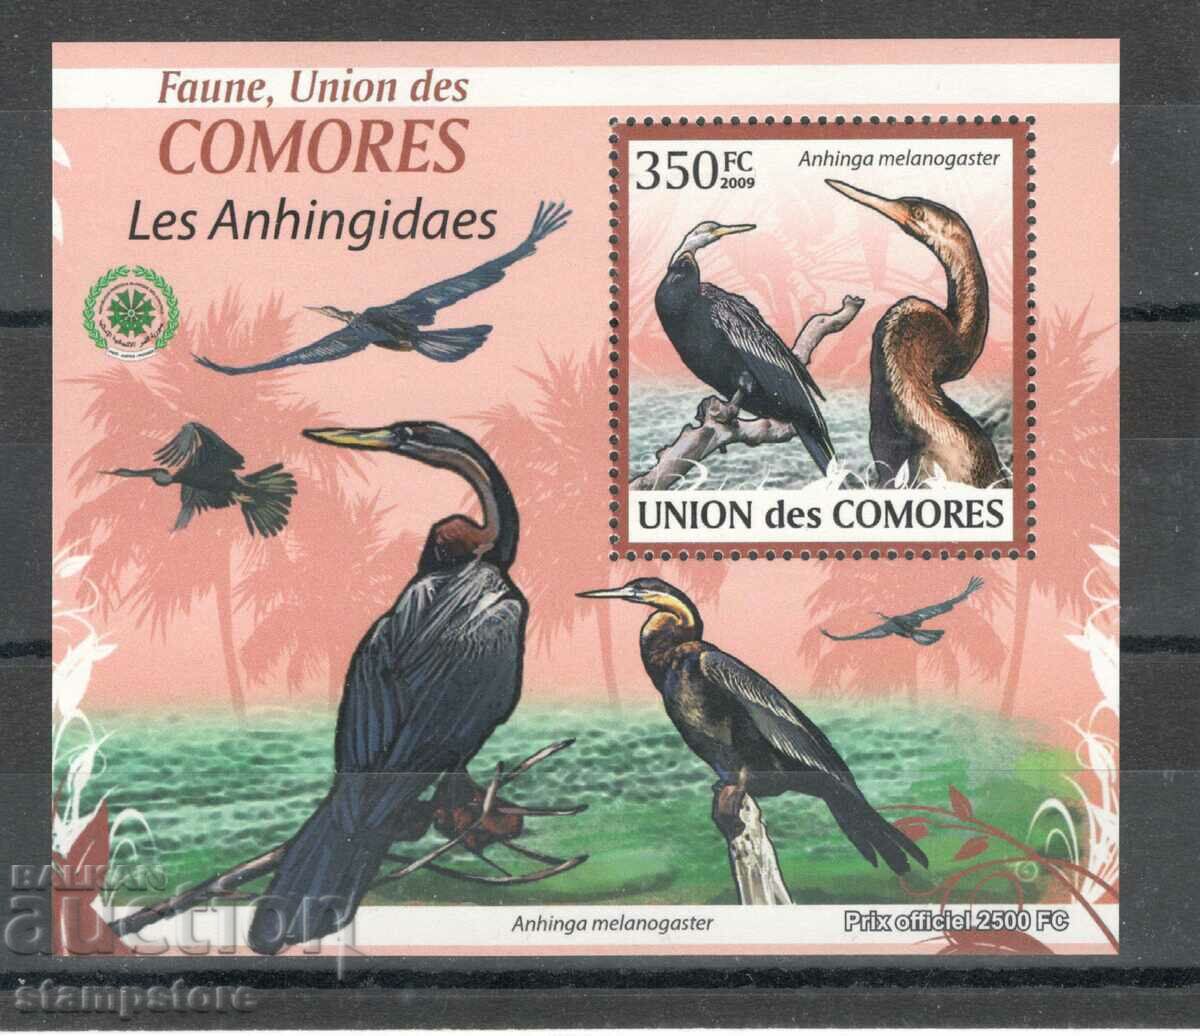 Fauna of Comoros Islands - Birds